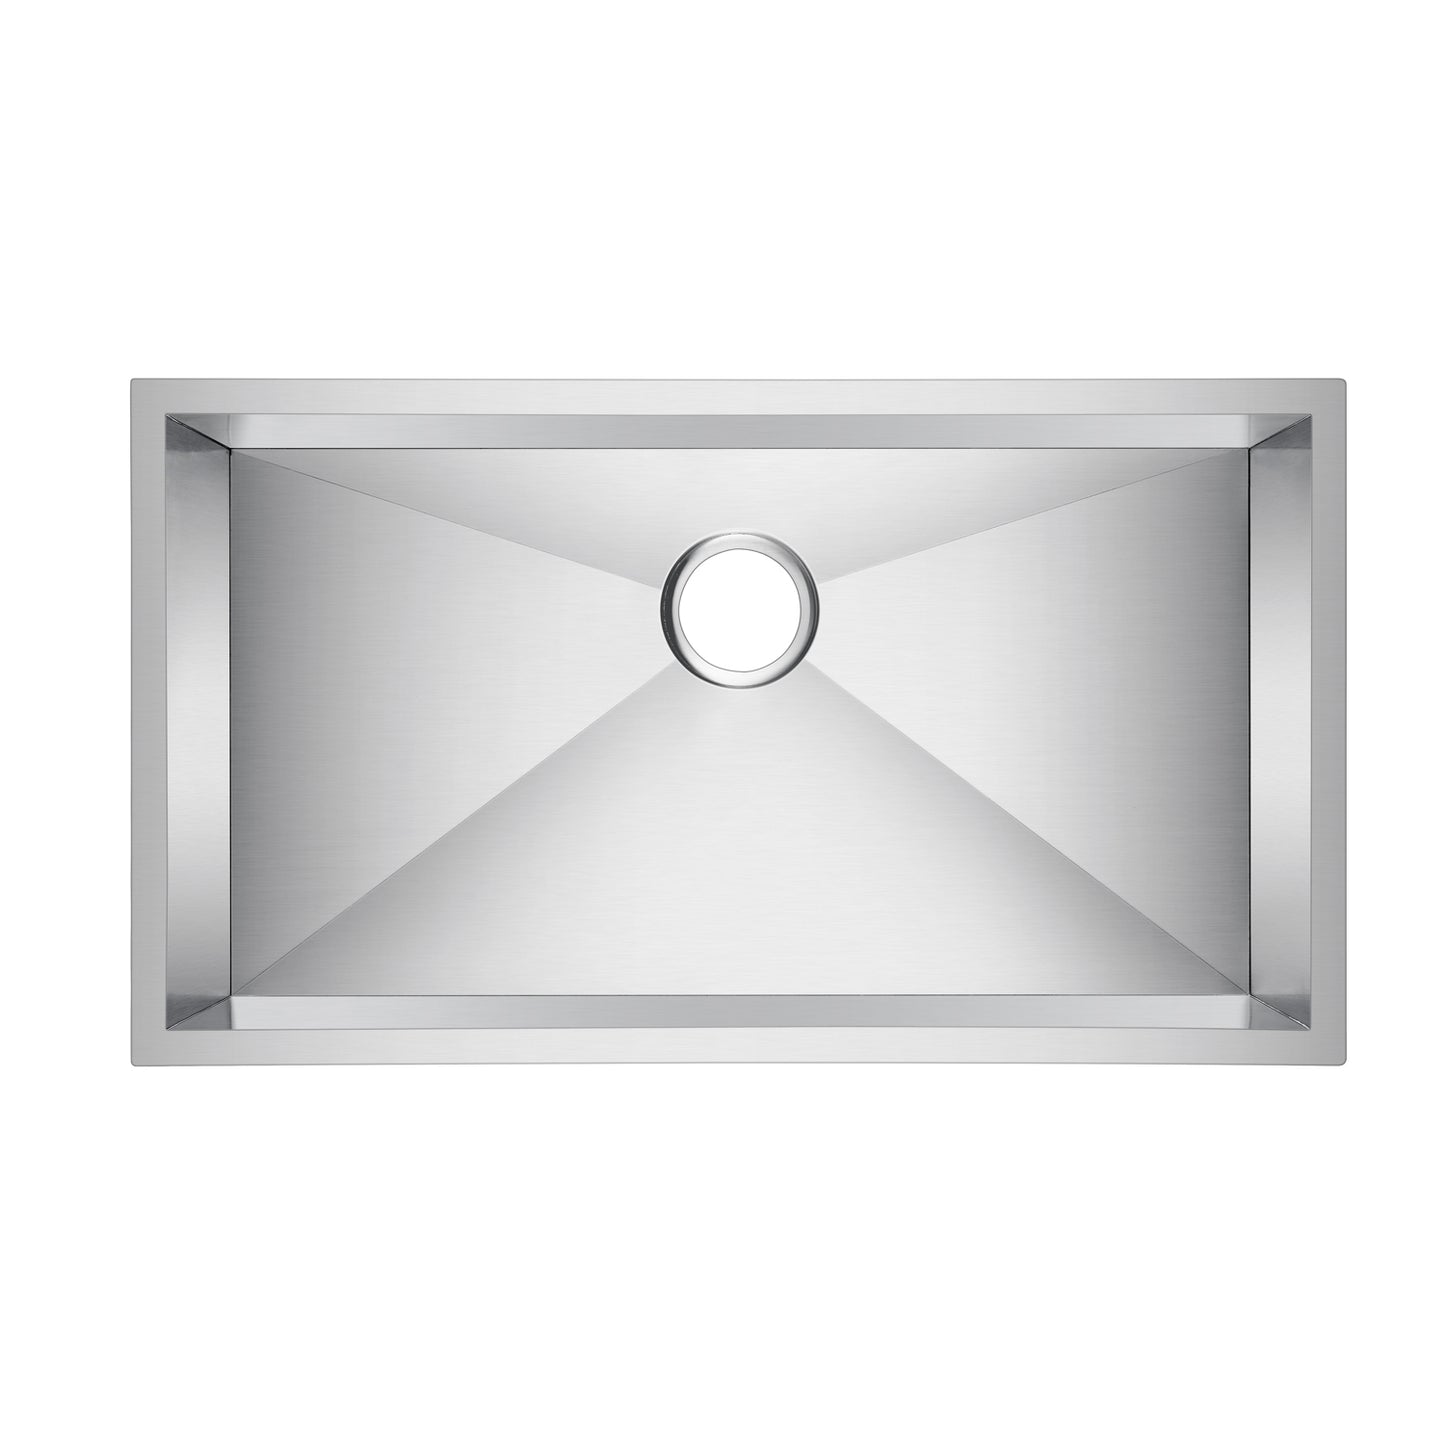 Ellison 32" x 18" Stainless Steel Single Bowl Undermount Kitchen Sink